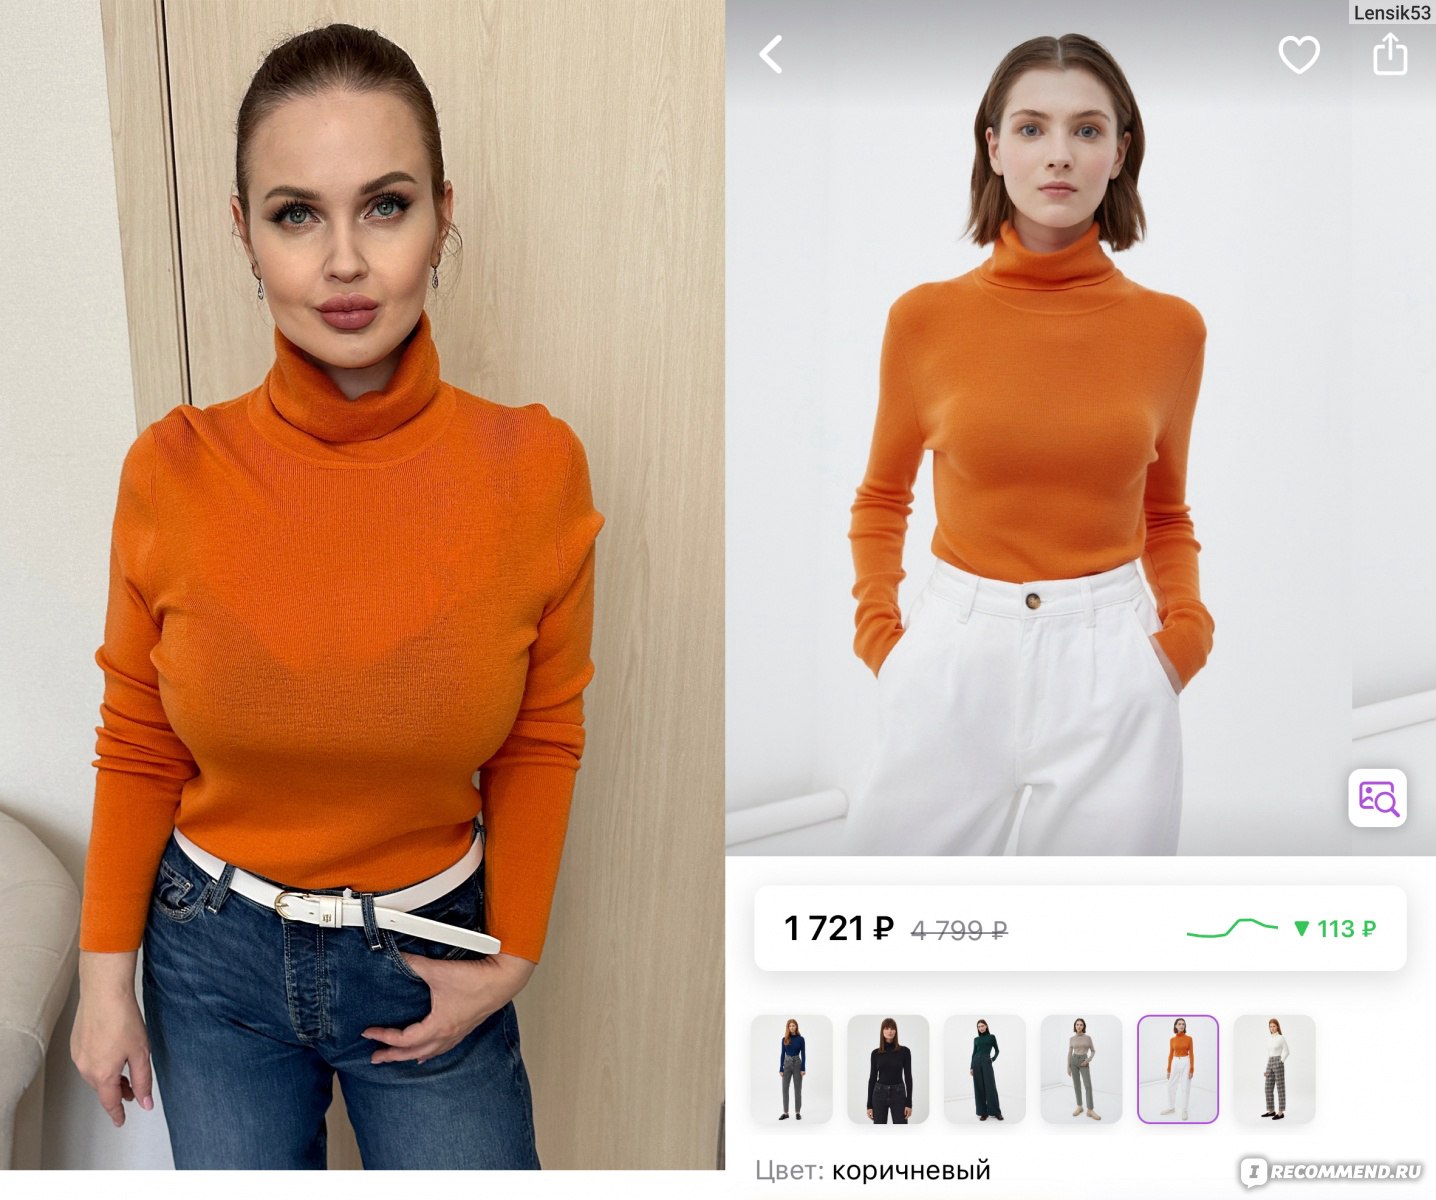 Wildberries.ru - Интернет-магазин модной одежды и обуви фото